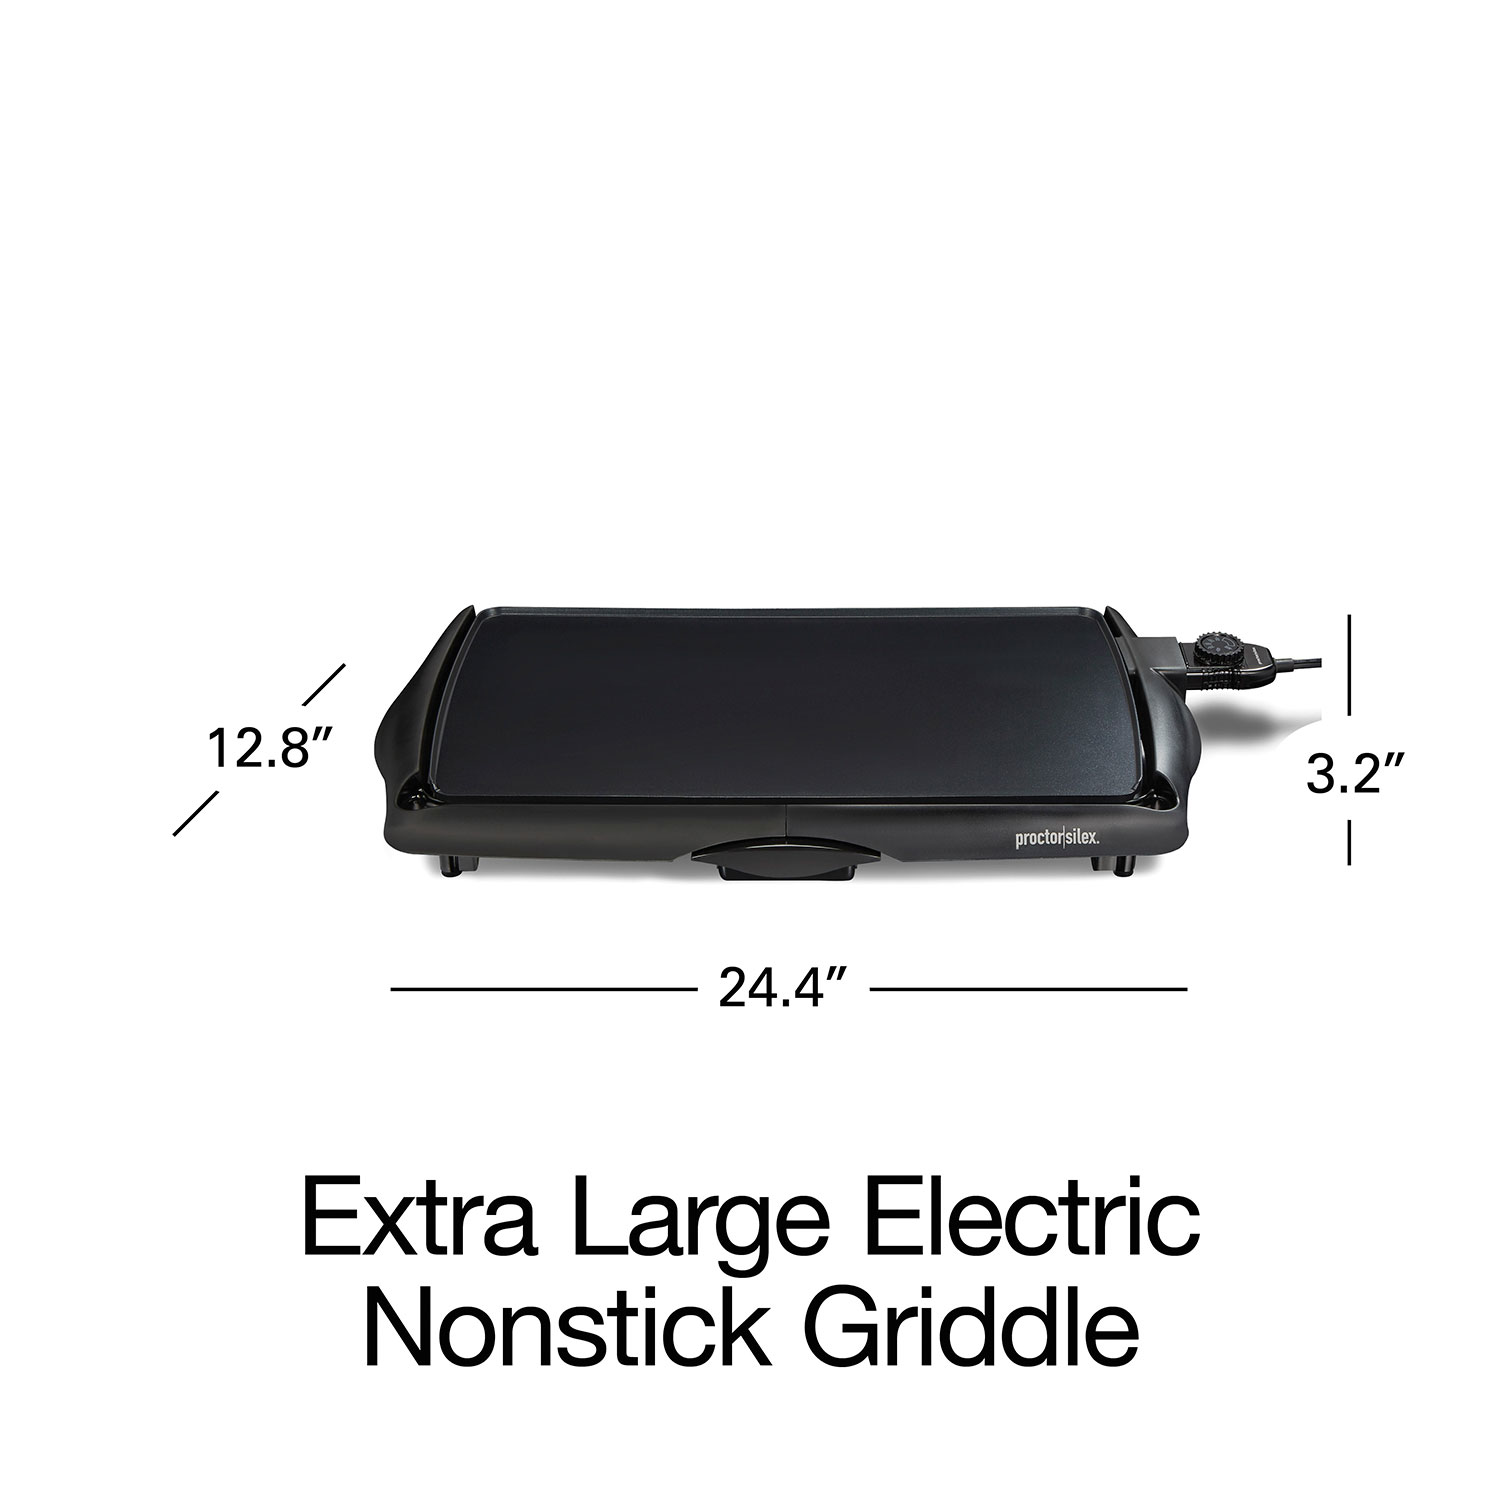 Proctor Silex Non-stick Griddle In Black : Target